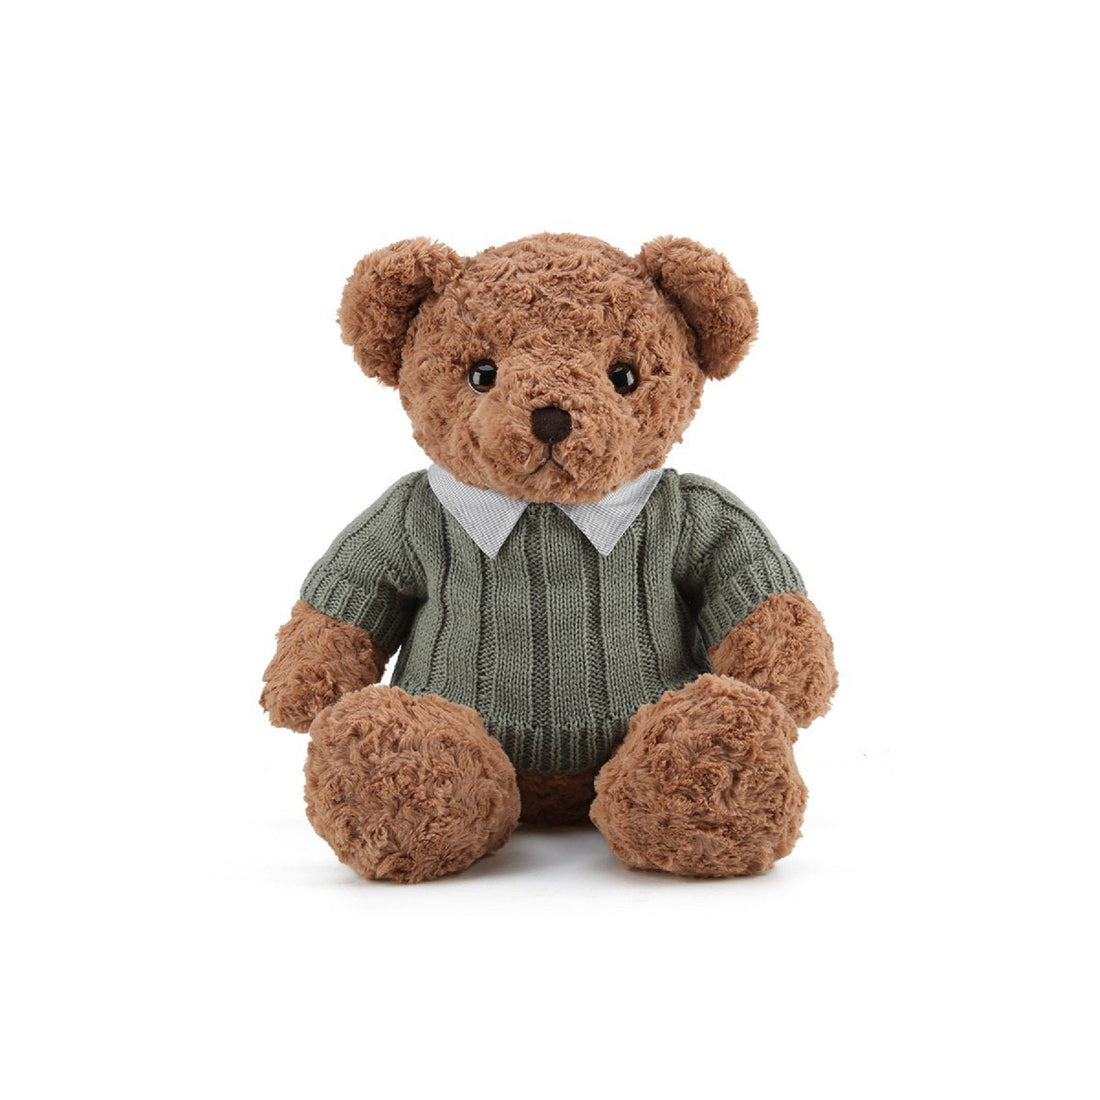 Mr. Bear Chocolate Plush Doll - 0cm